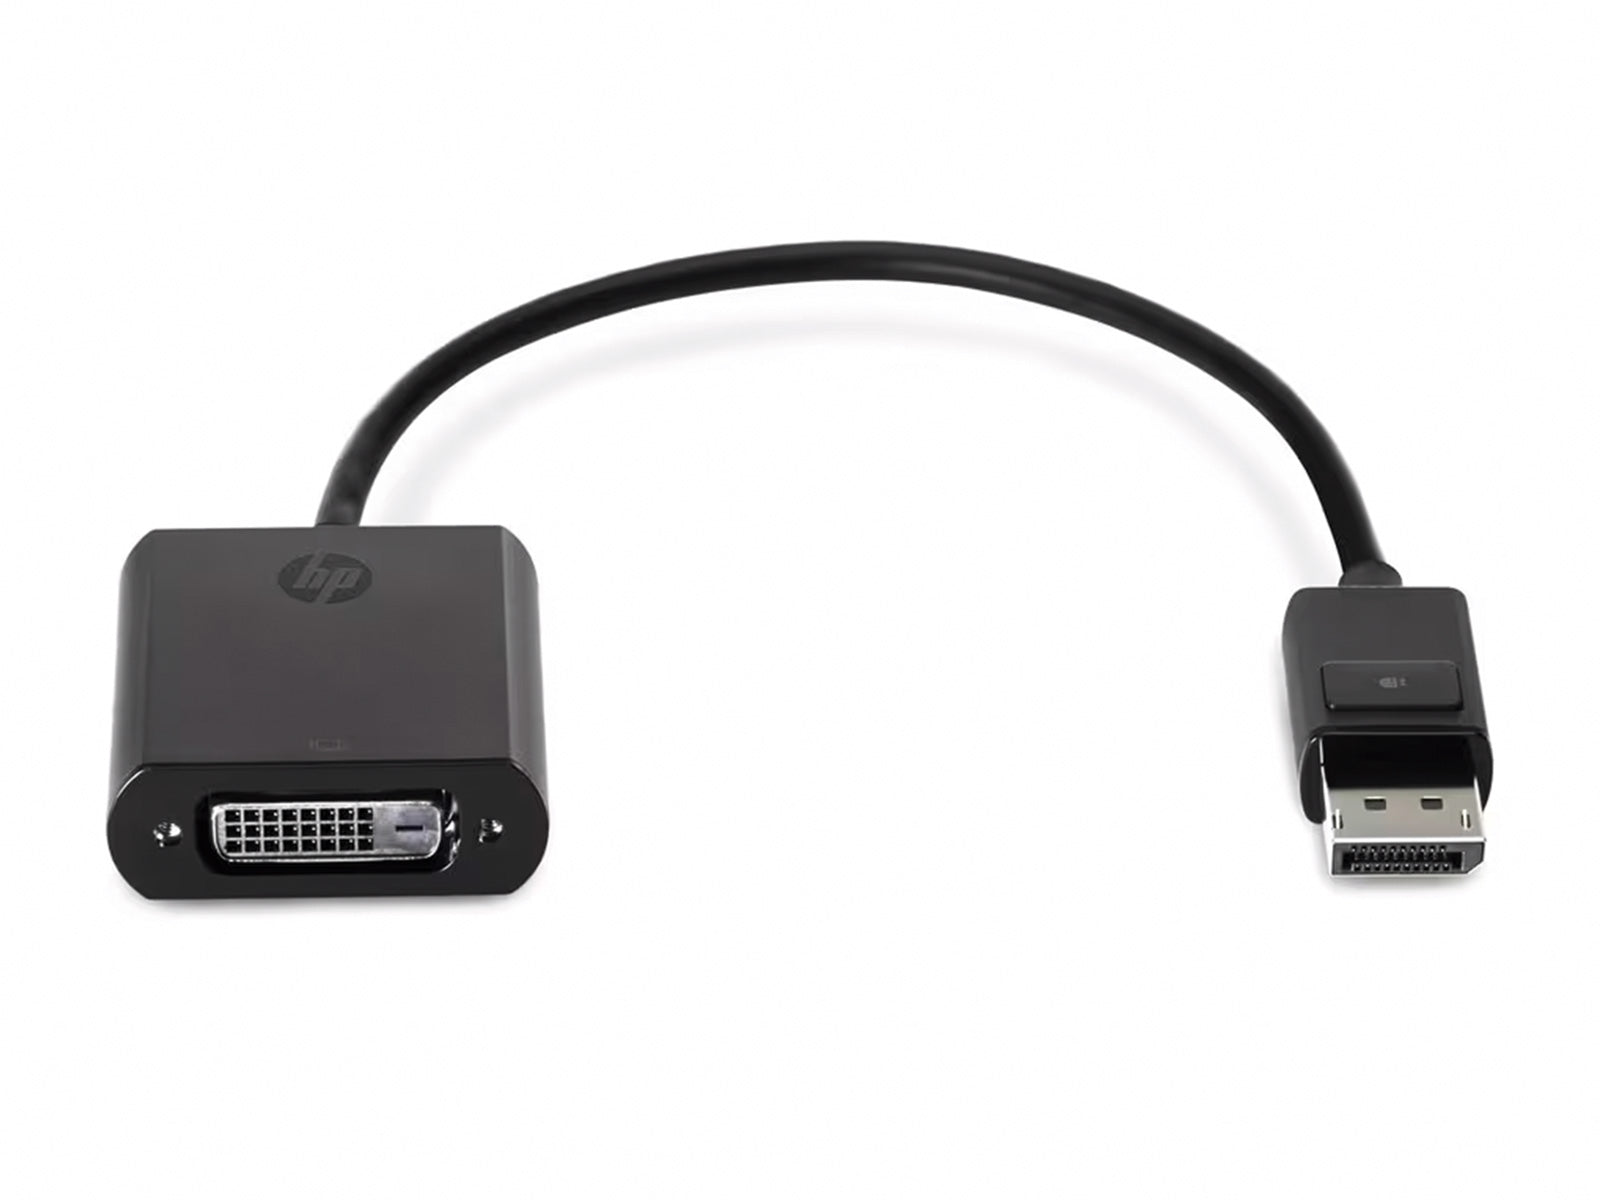 HP DisplayPort to DVI Single-Link Video Signal Adapter Converter (752660-001) Monitors.com 